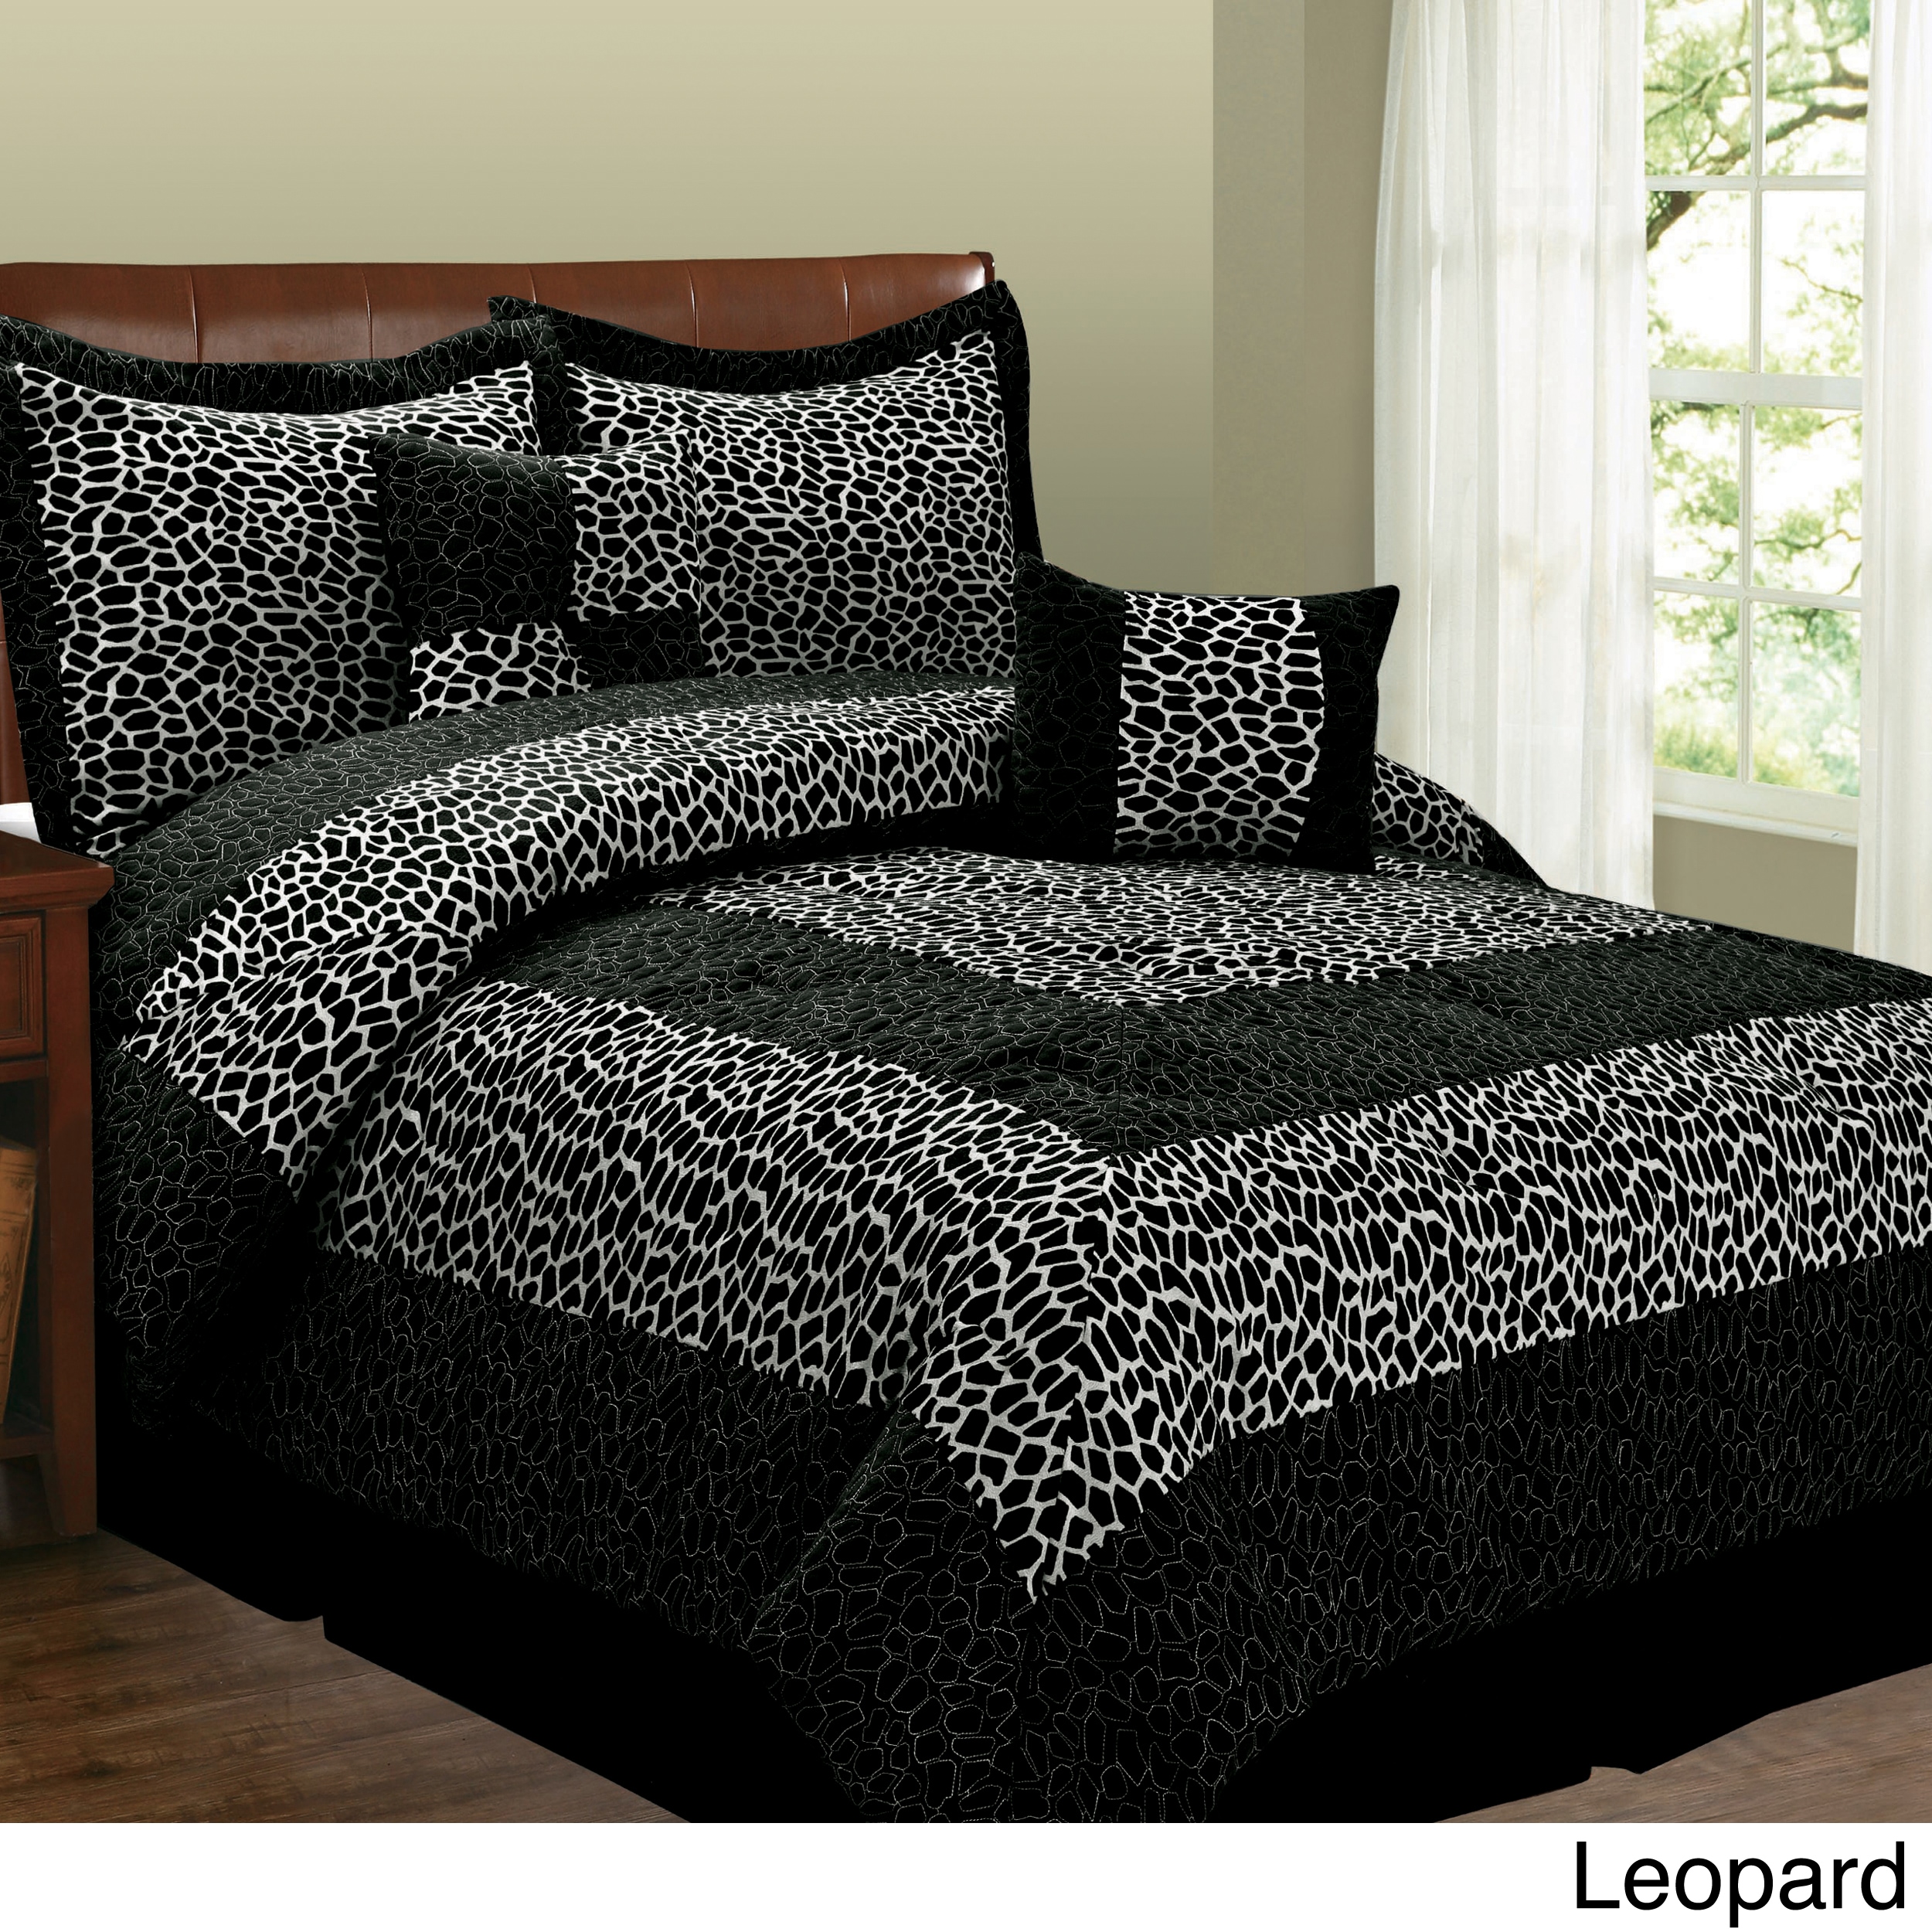 King Size Leopard Animal Print Comforter Set Bedding Soft Micro